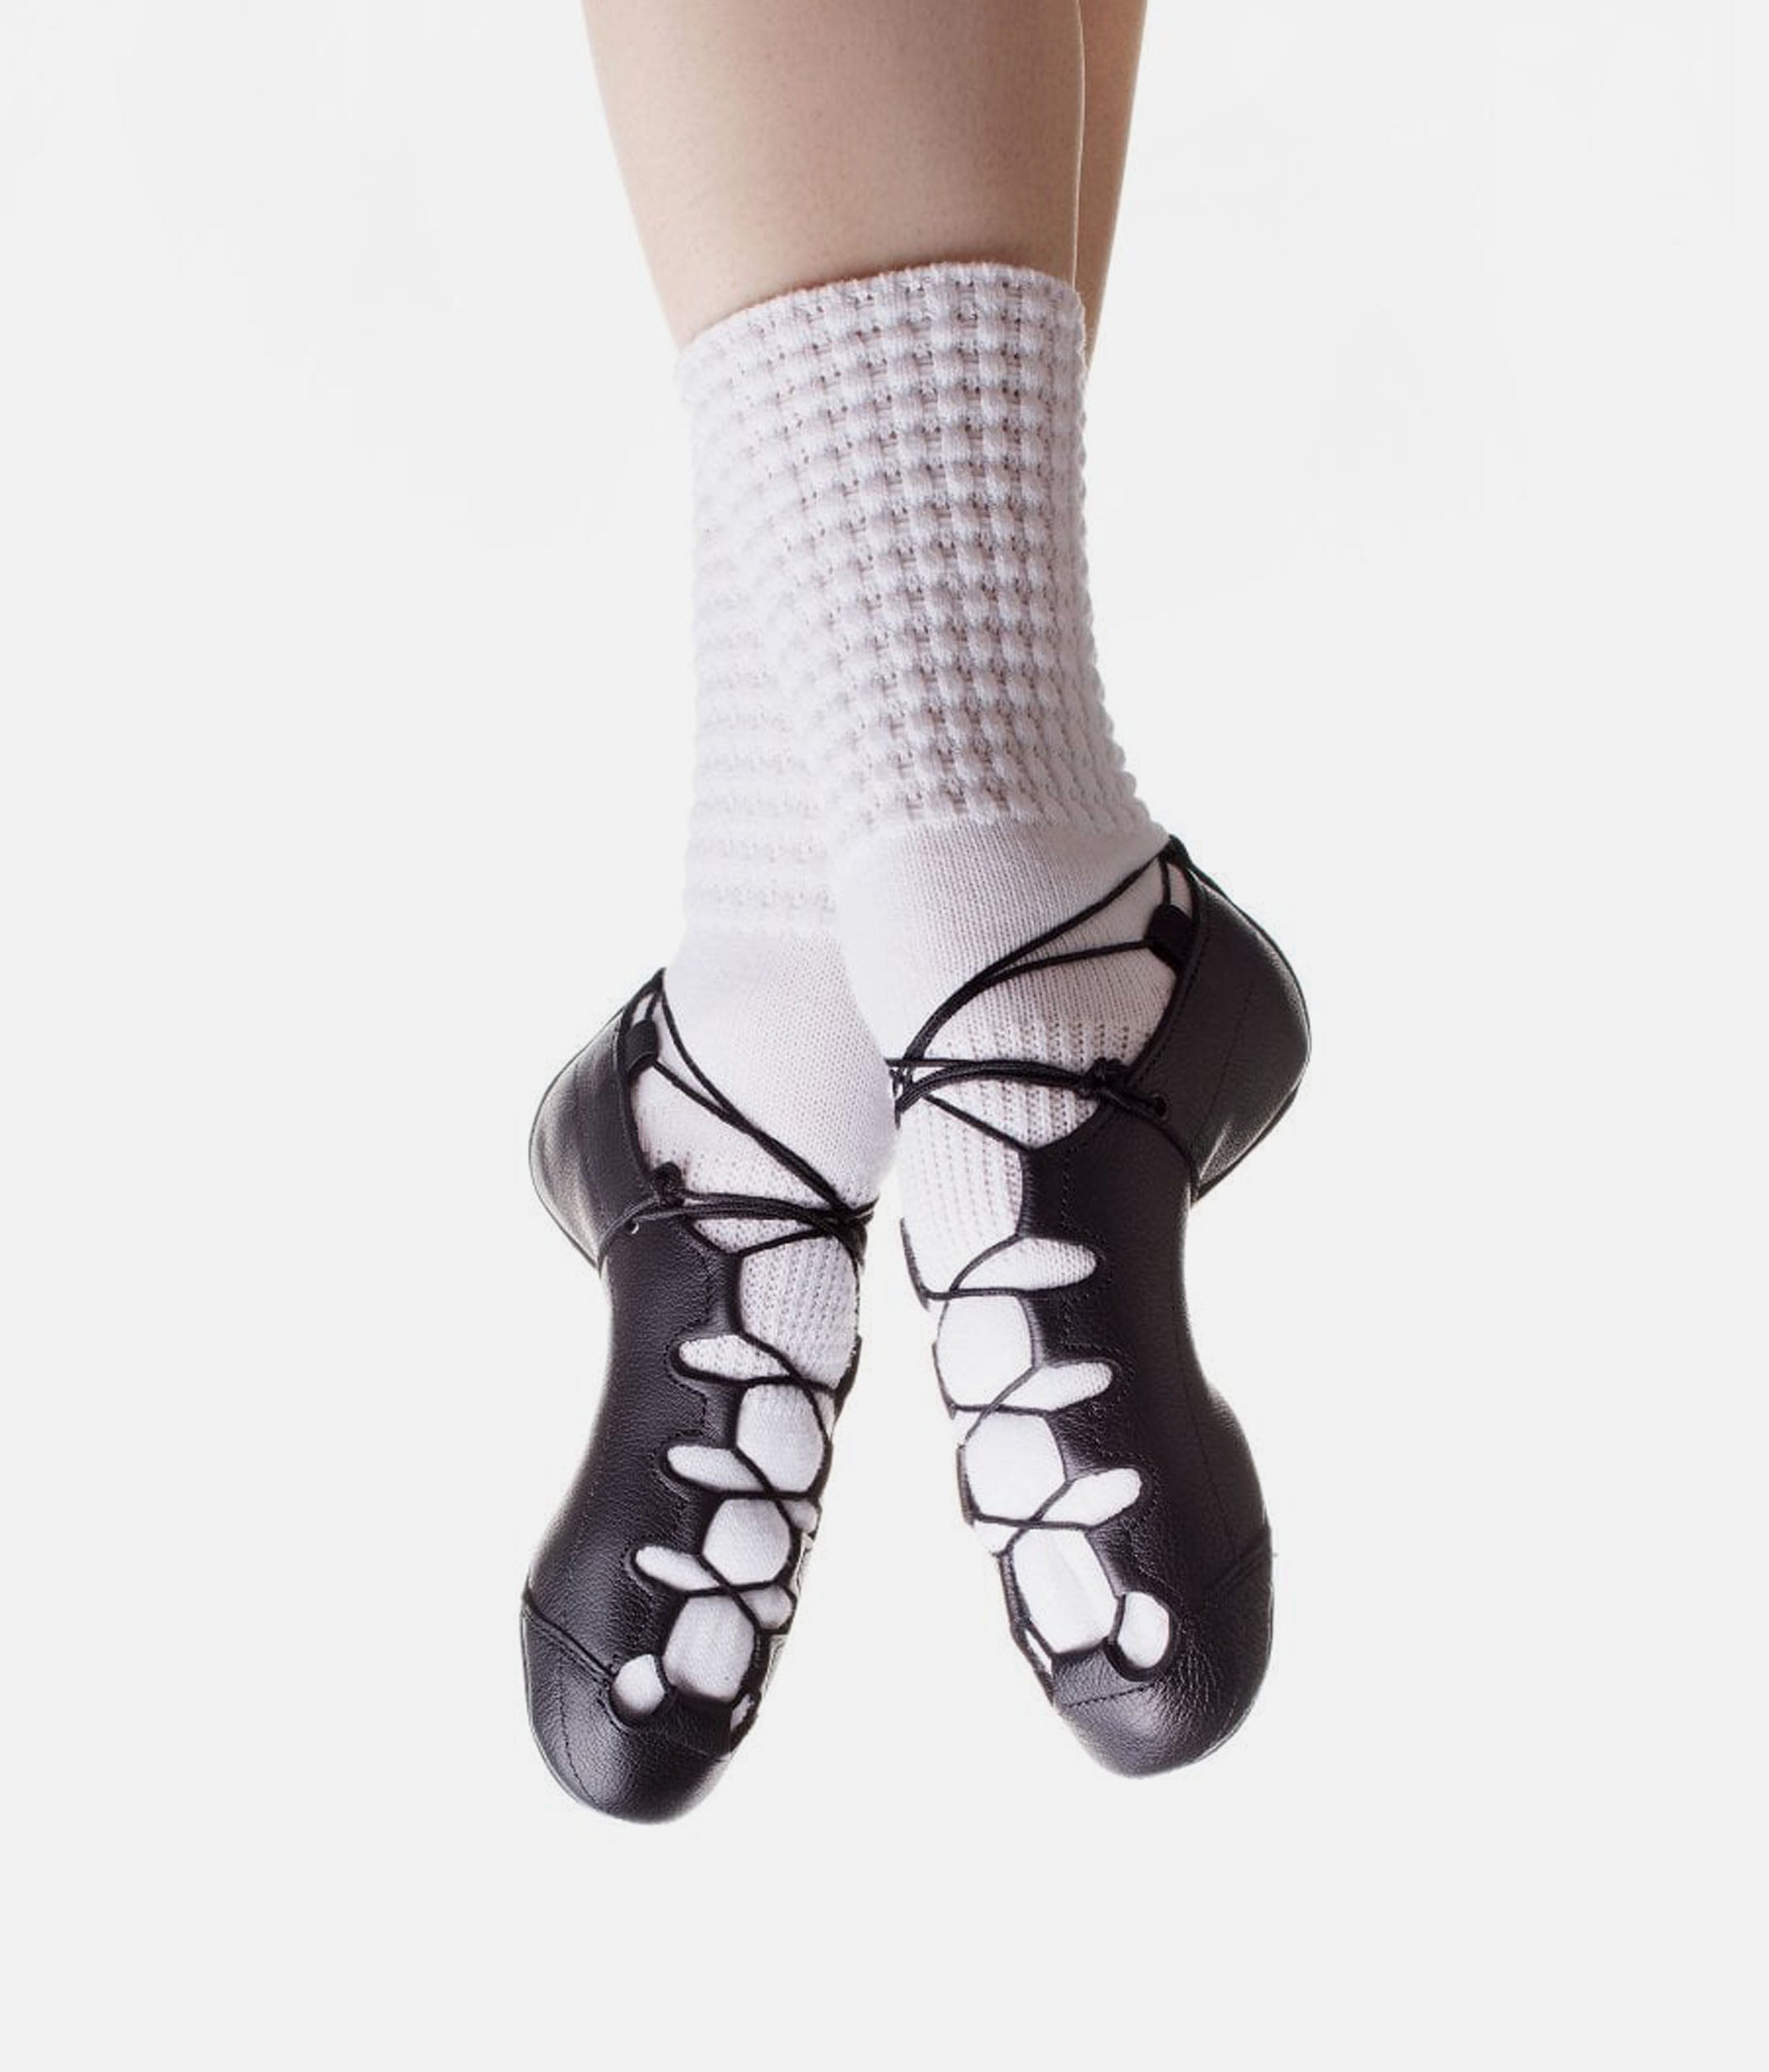 Poodle Sock, Tights, leg warmers - Irishdancer - Der Shop